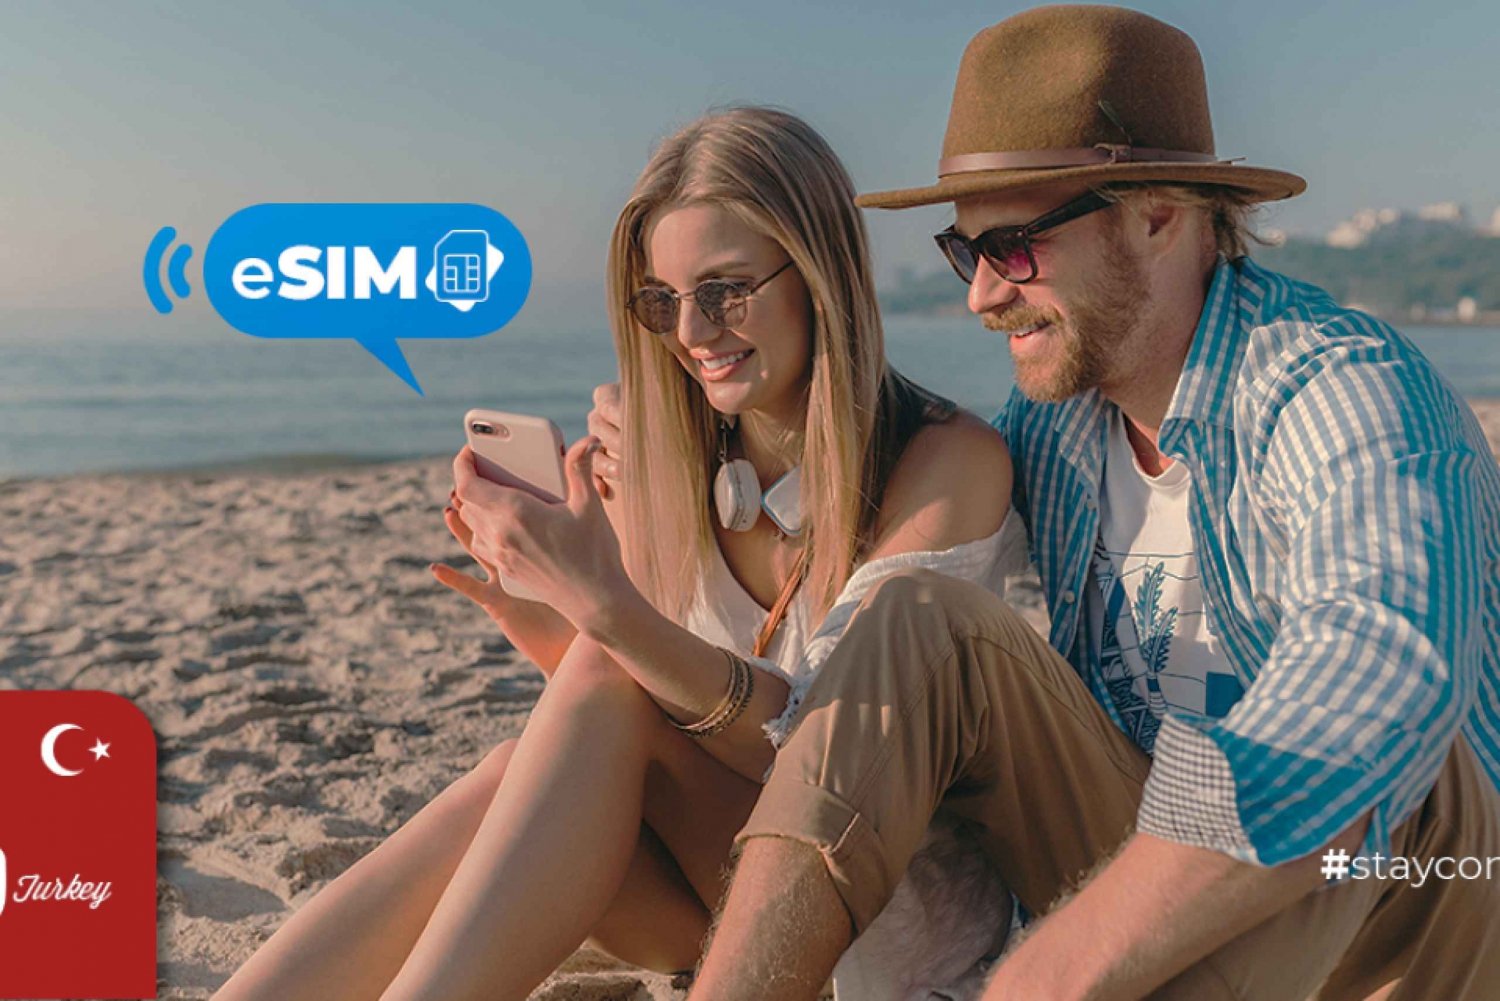 Kalkan / Turchia: Internet in roaming con eSIM Mobile Data